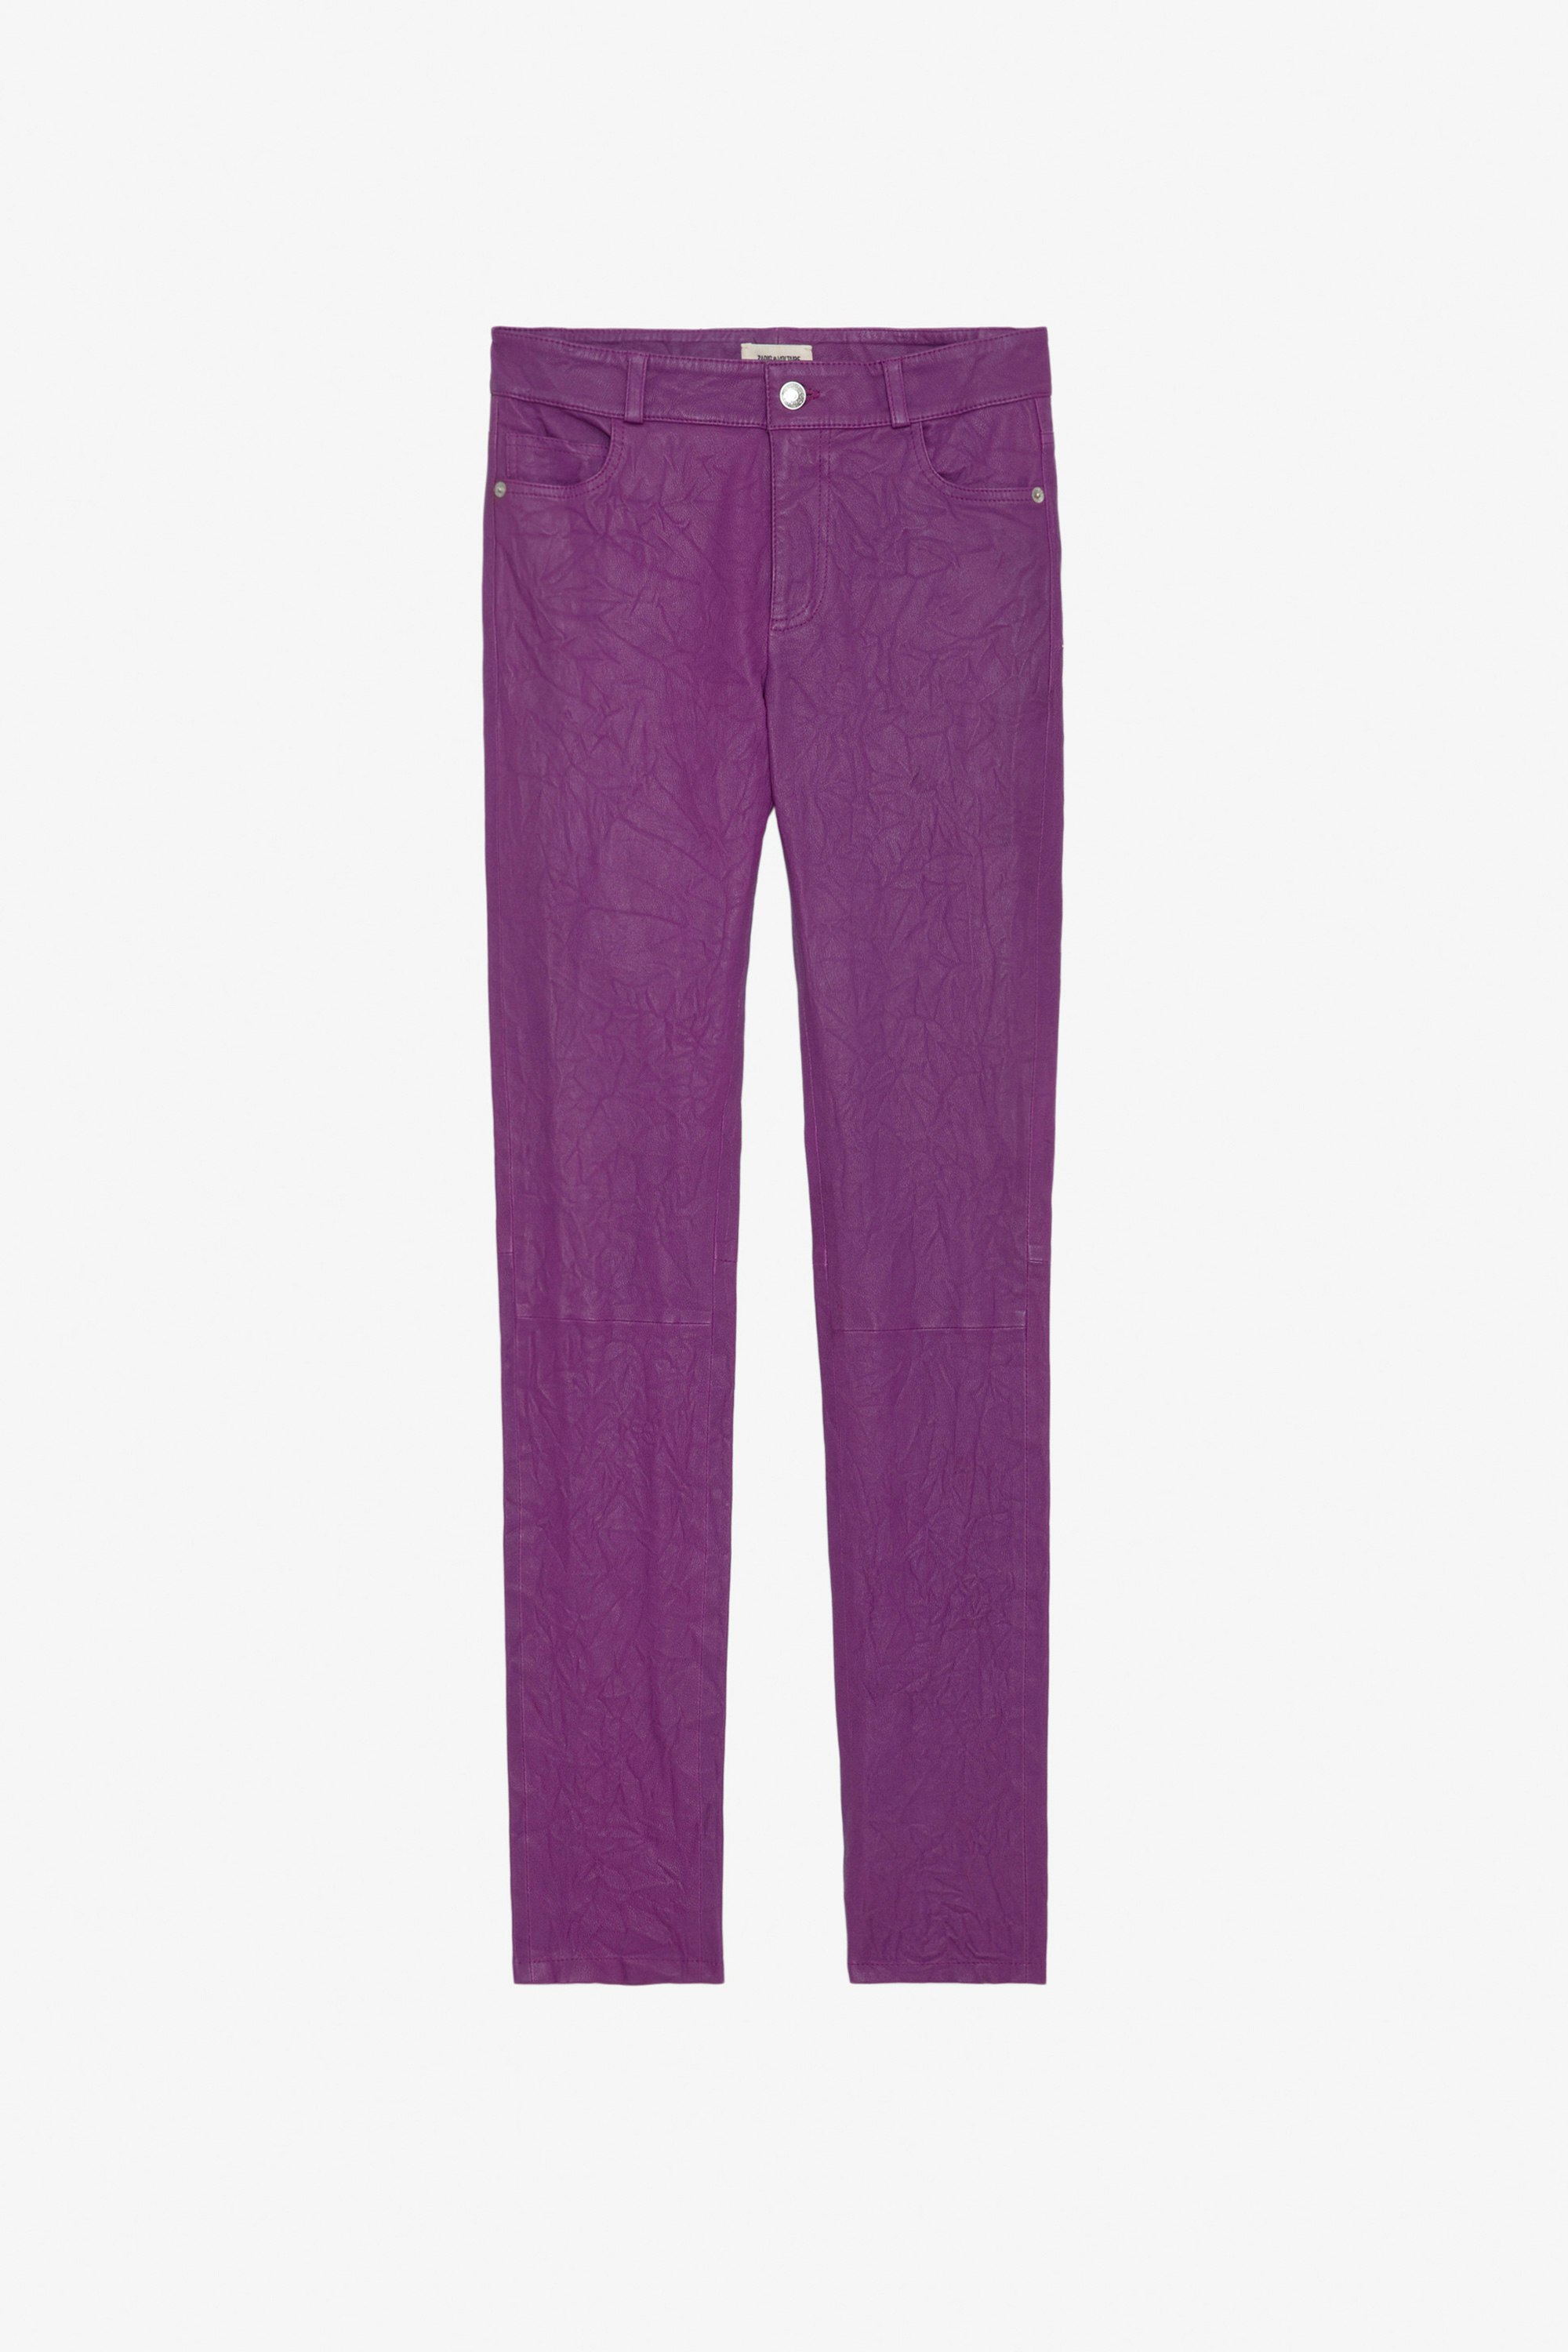 Pantaloni Phlame Pelle Stropicciata - Pantaloni in pelle stropicciata viola con tasche.